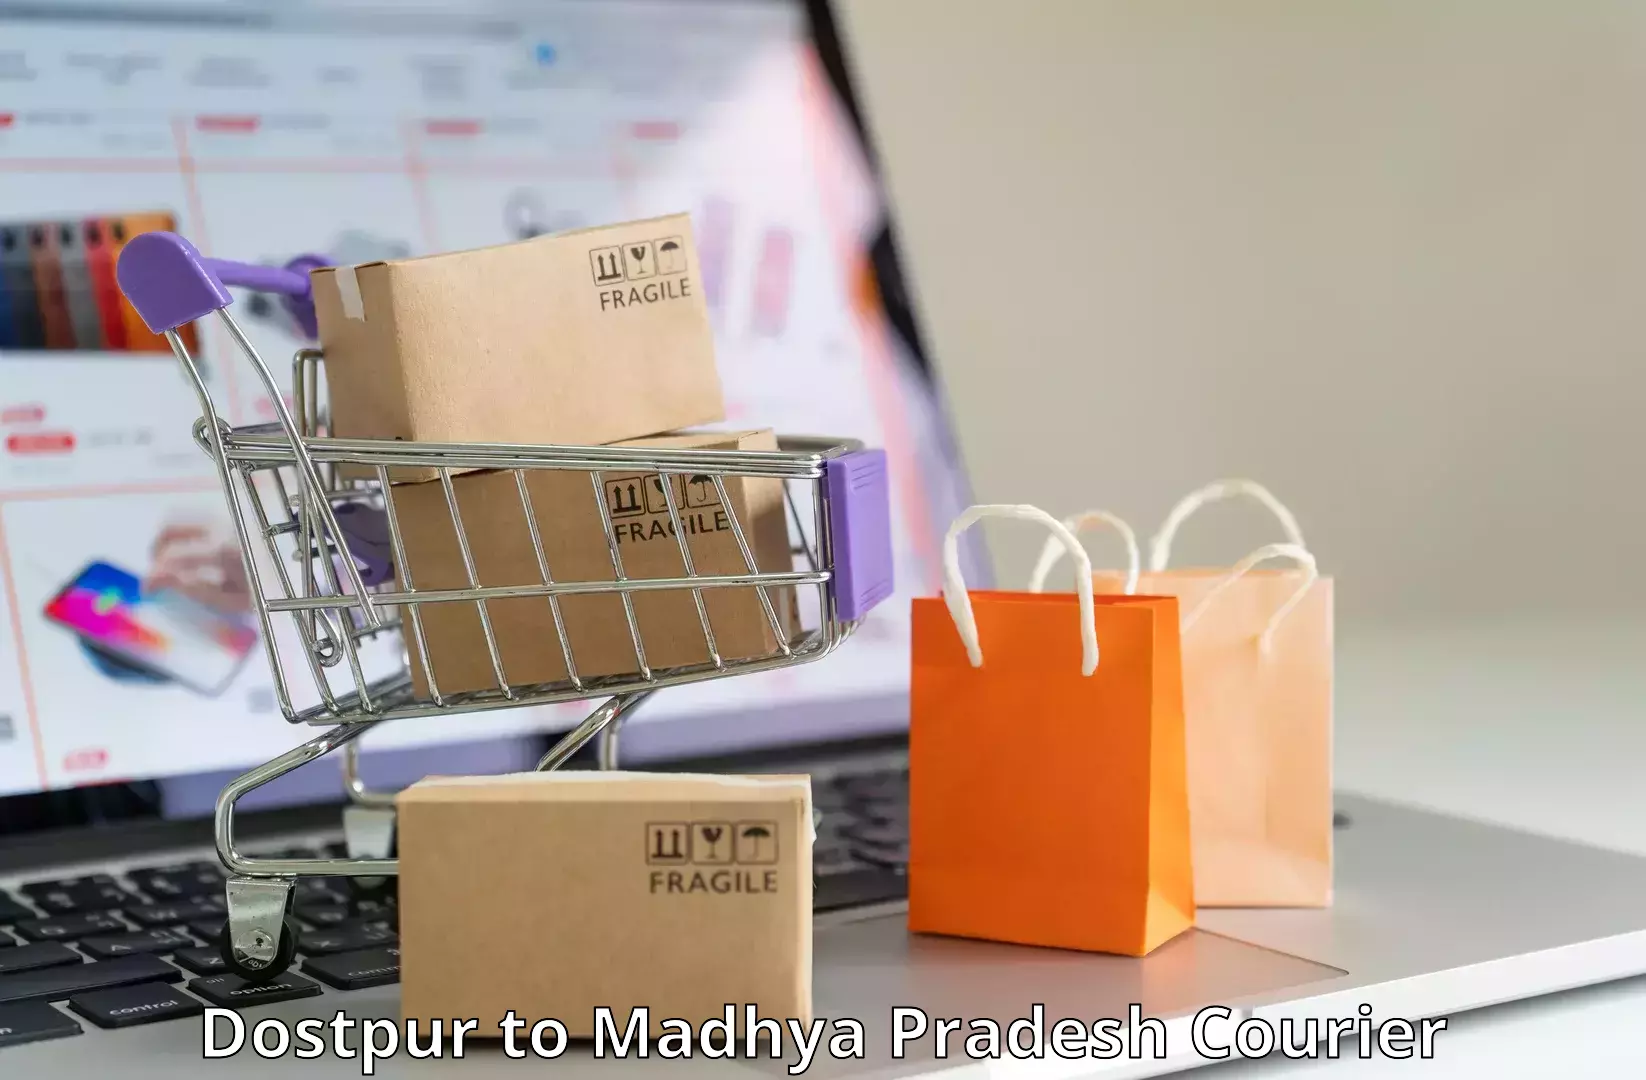 Speedy delivery service Dostpur to Madhya Pradesh